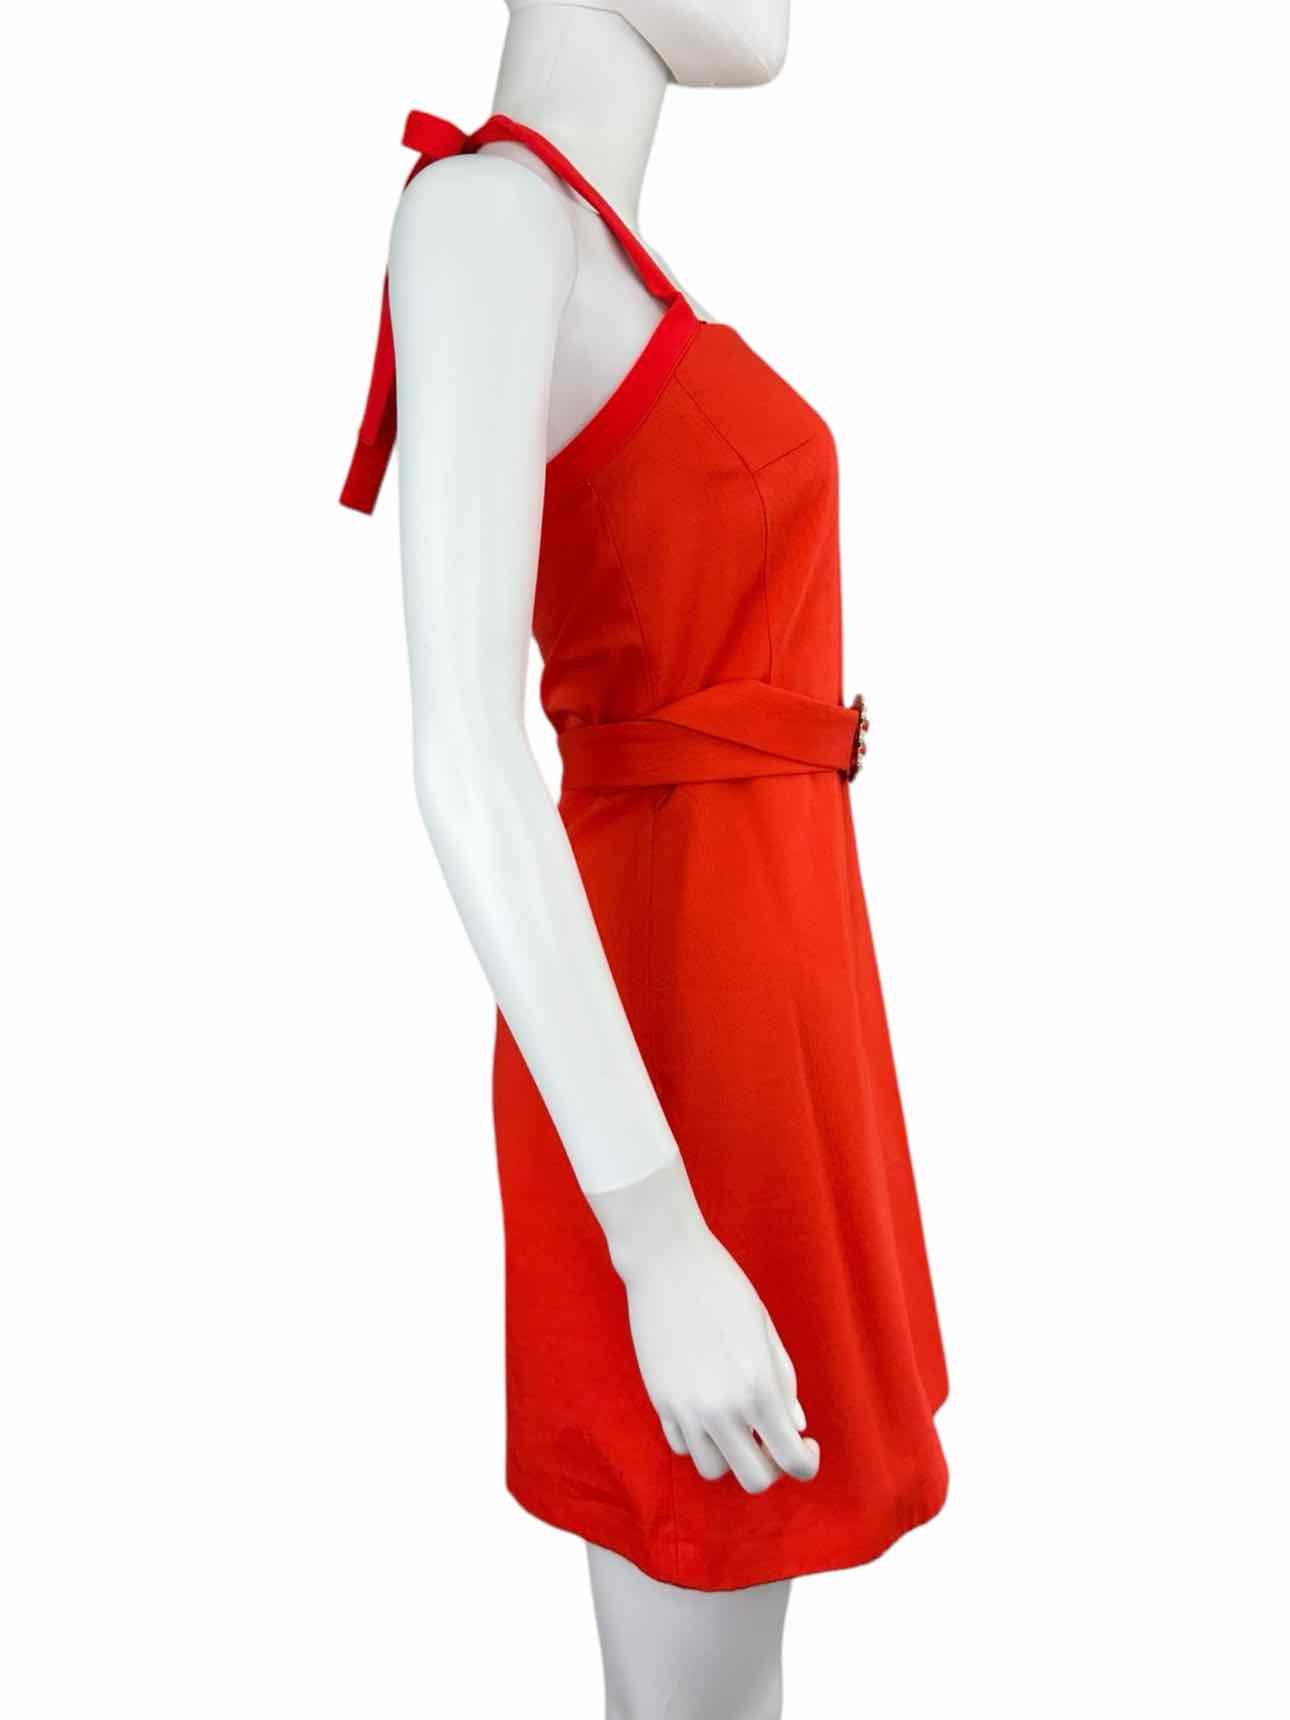 Tara Jarmon Red Halter Mini Cocktail Dress Size XS